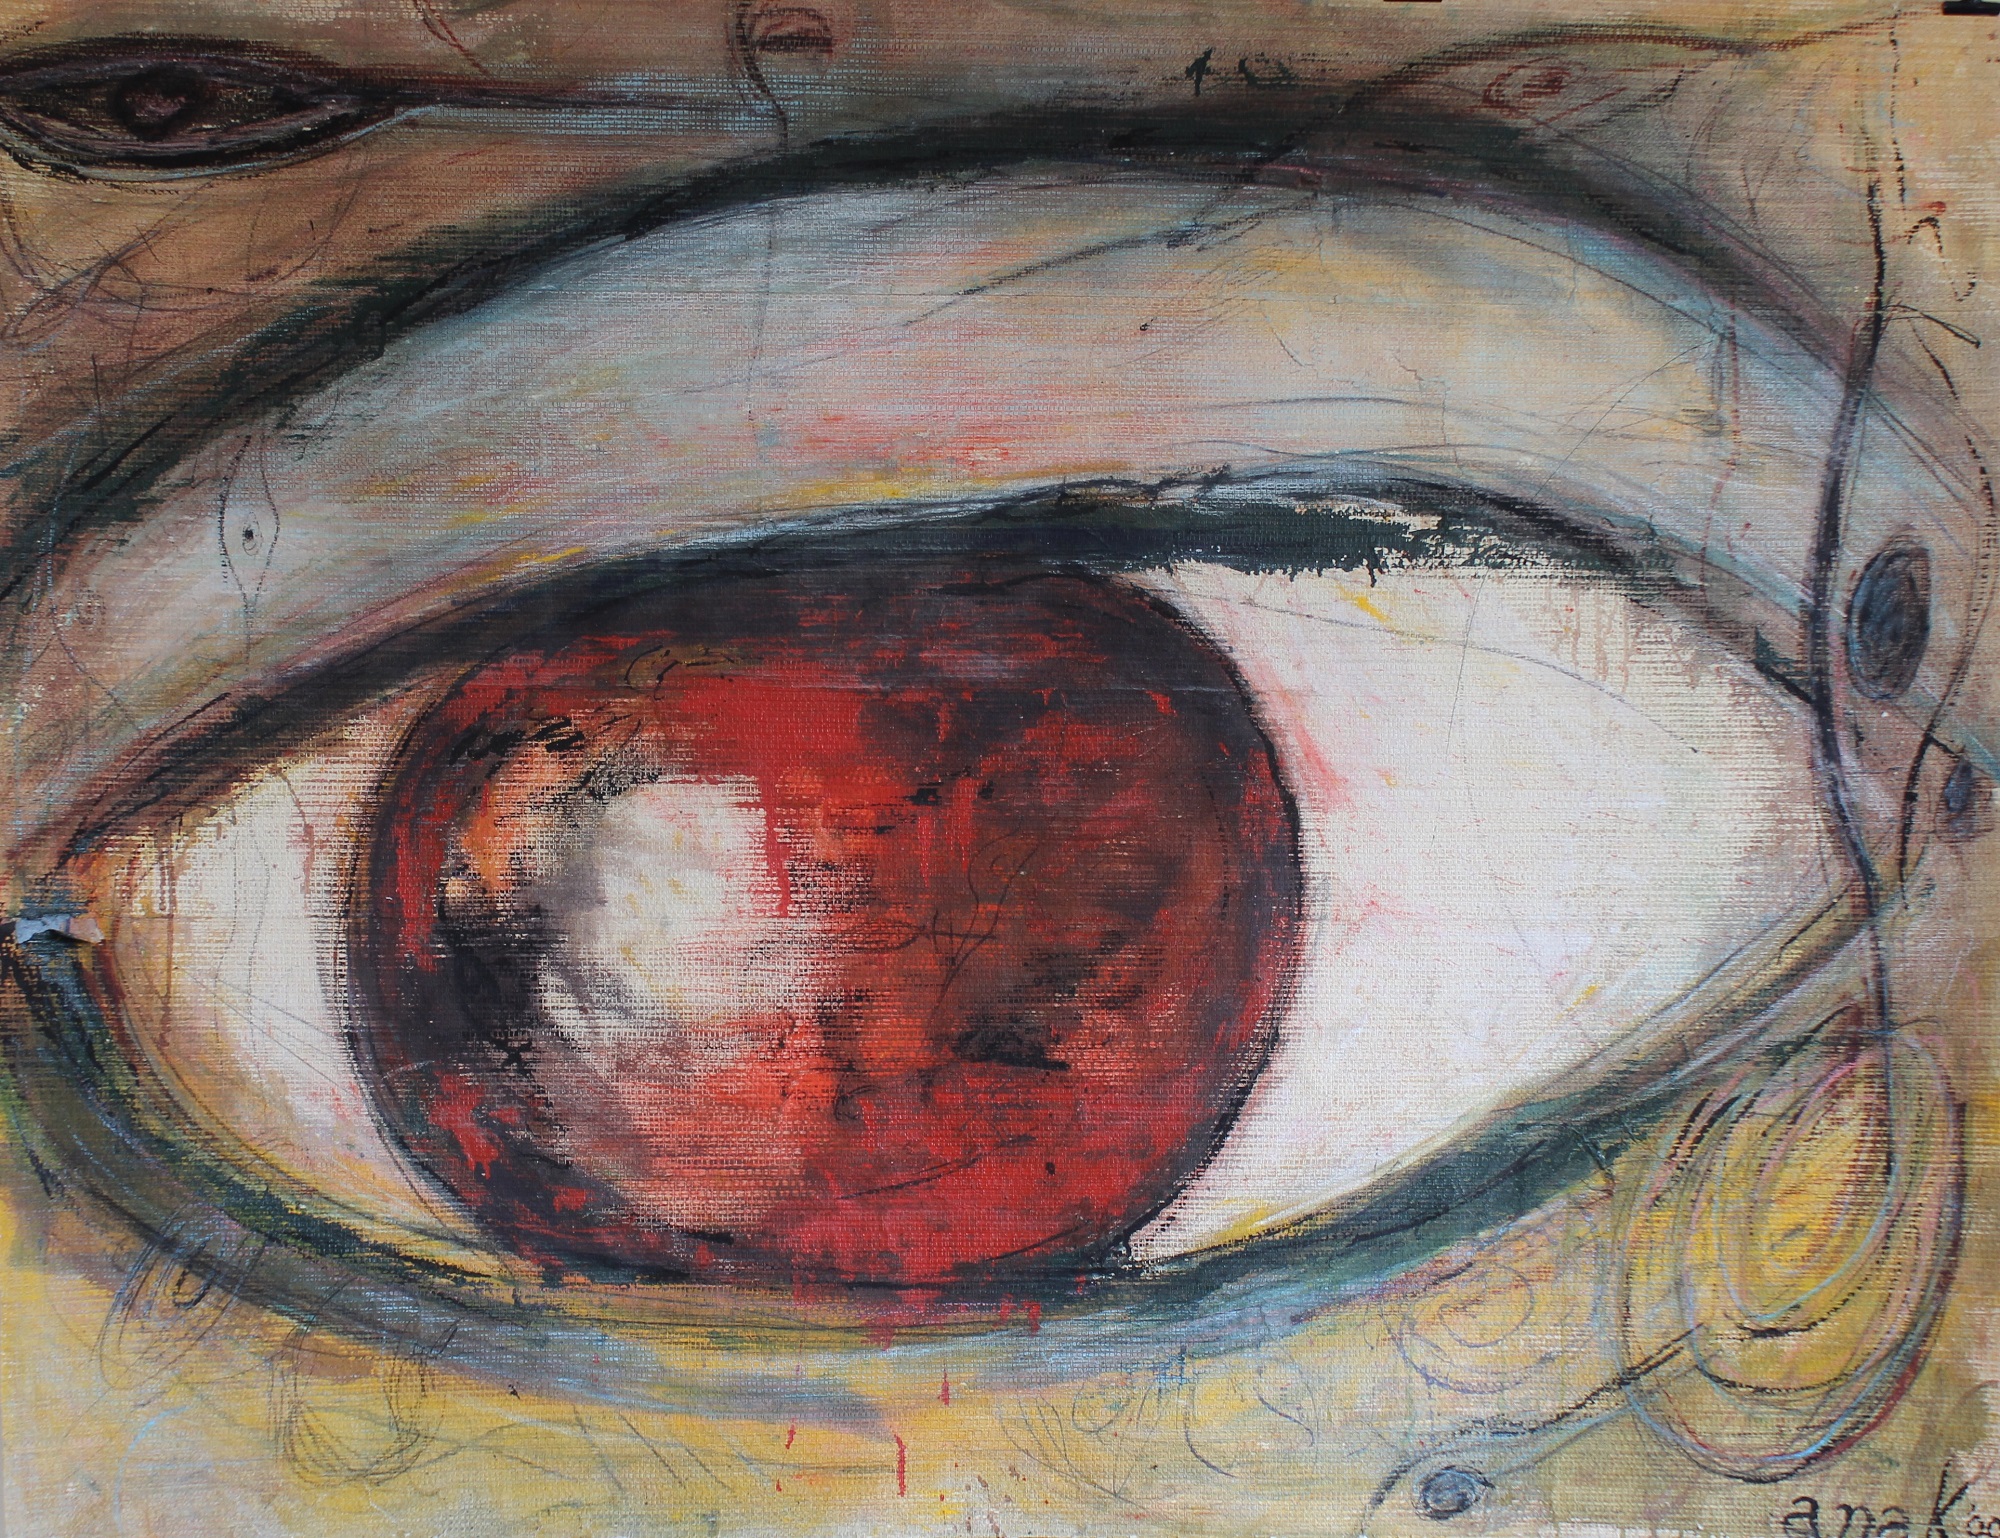 Eye, 130x169 cm, mix media on wallpaper cut-outs, 2000